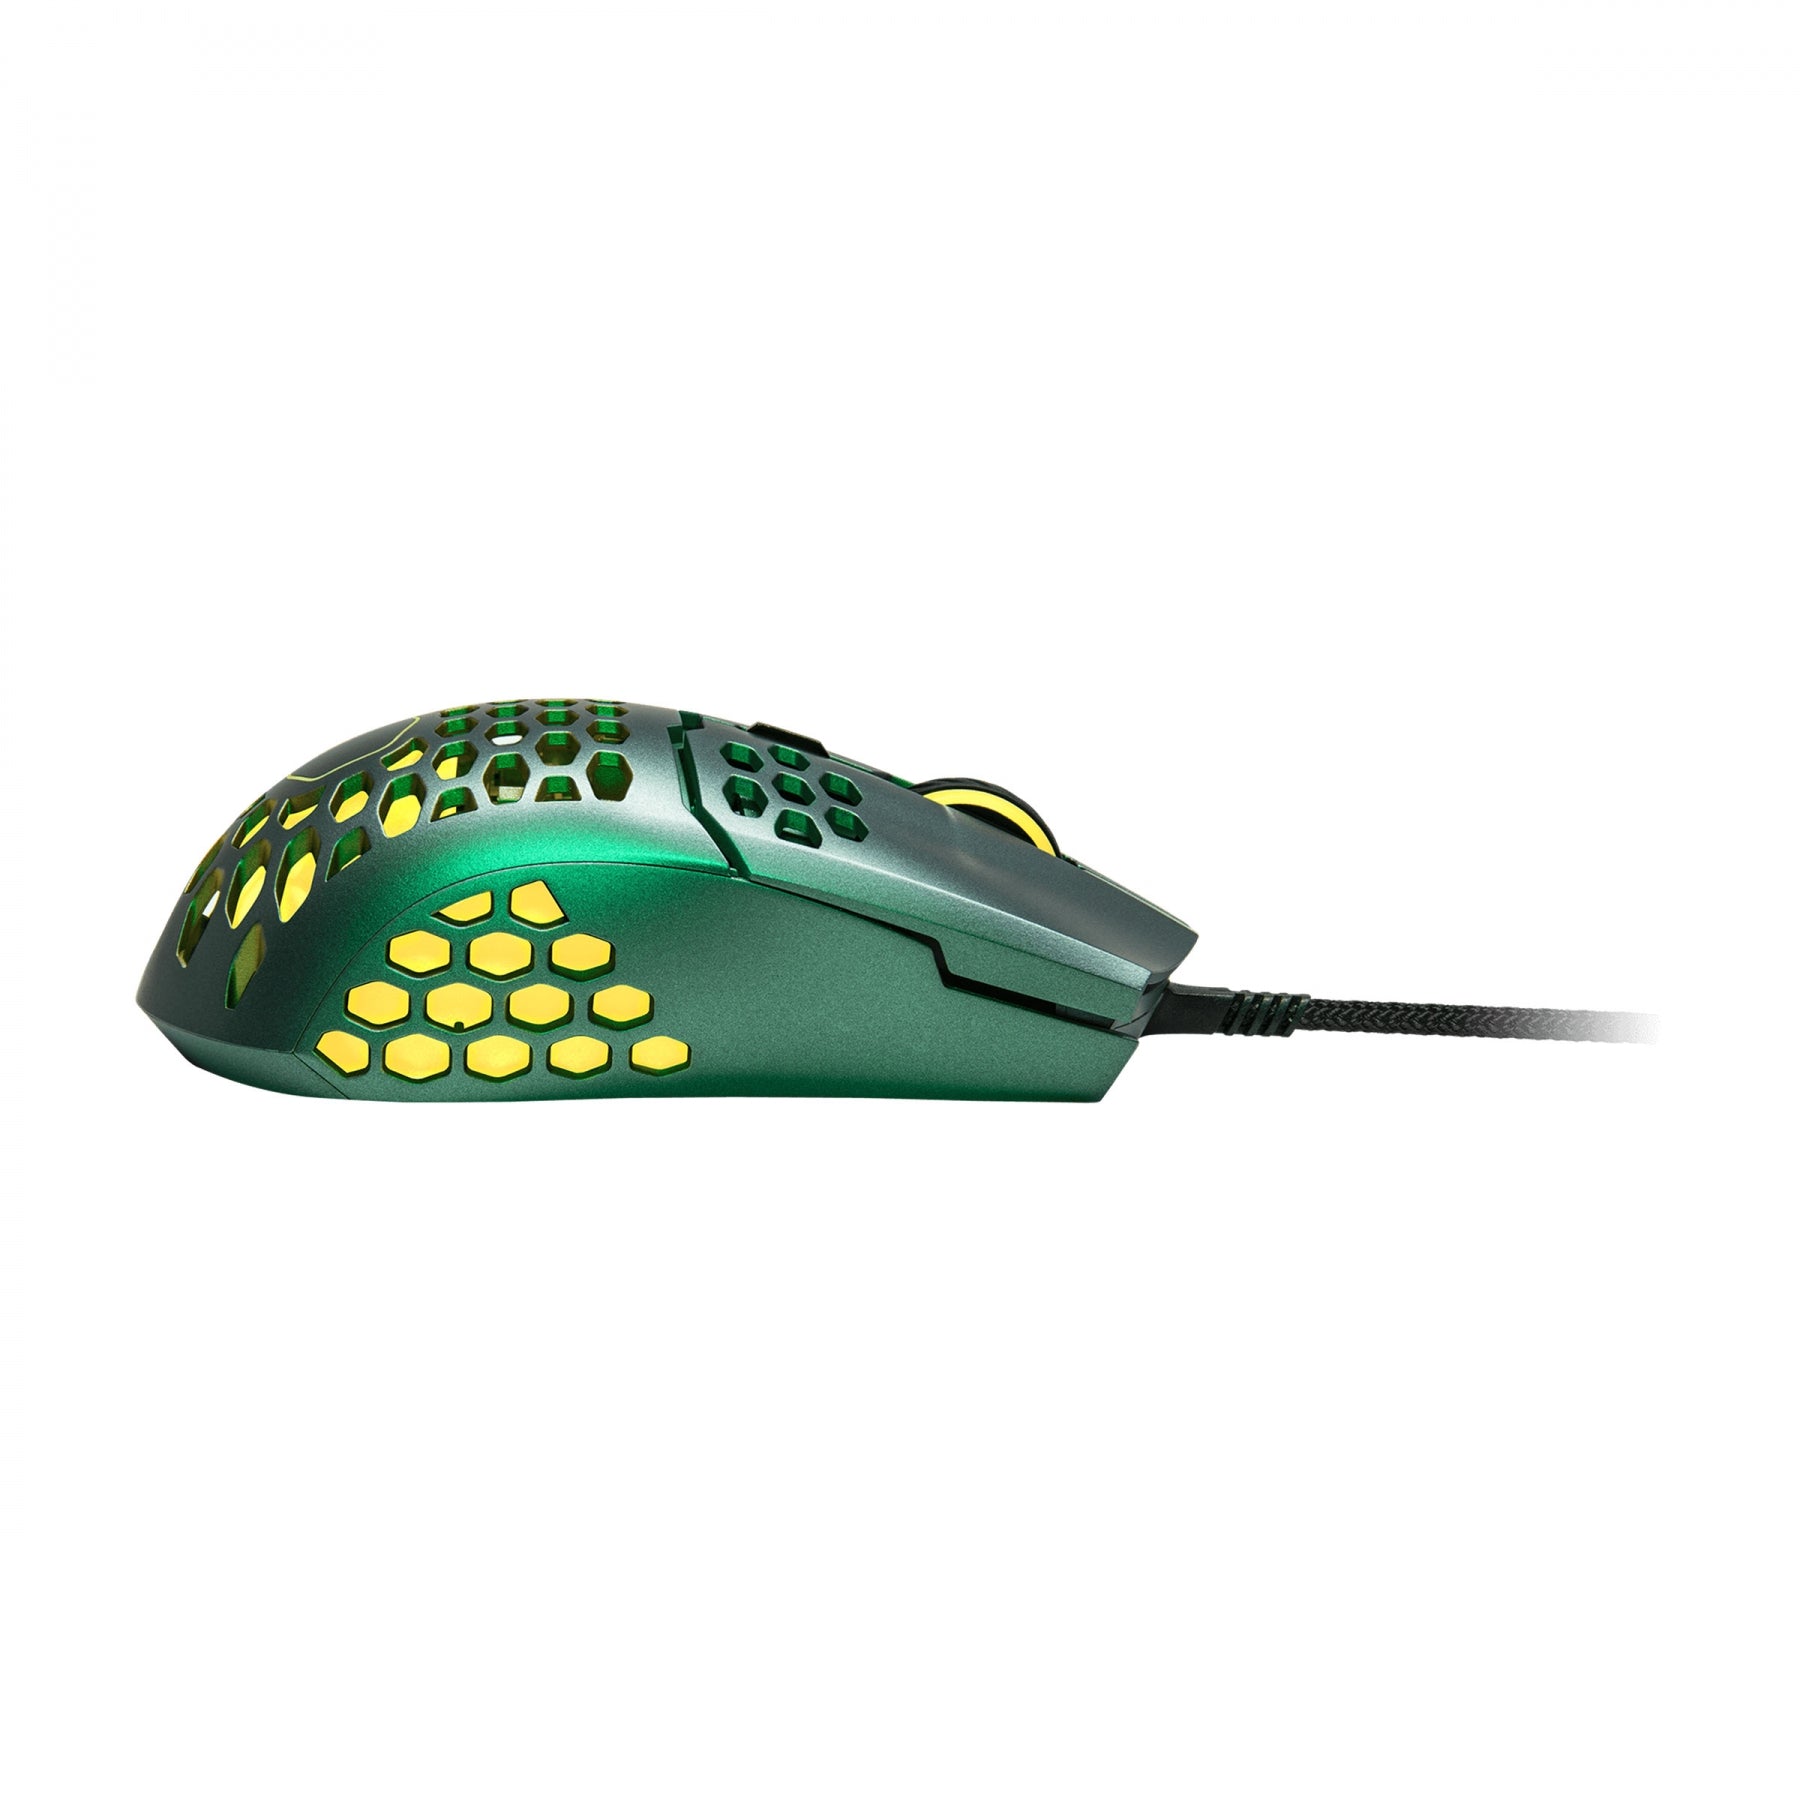 Cooler Master MM711 Olive Green Lightweight Gaming Mouse W/ Honeycomb Shell MKVITUMX2V |33405|